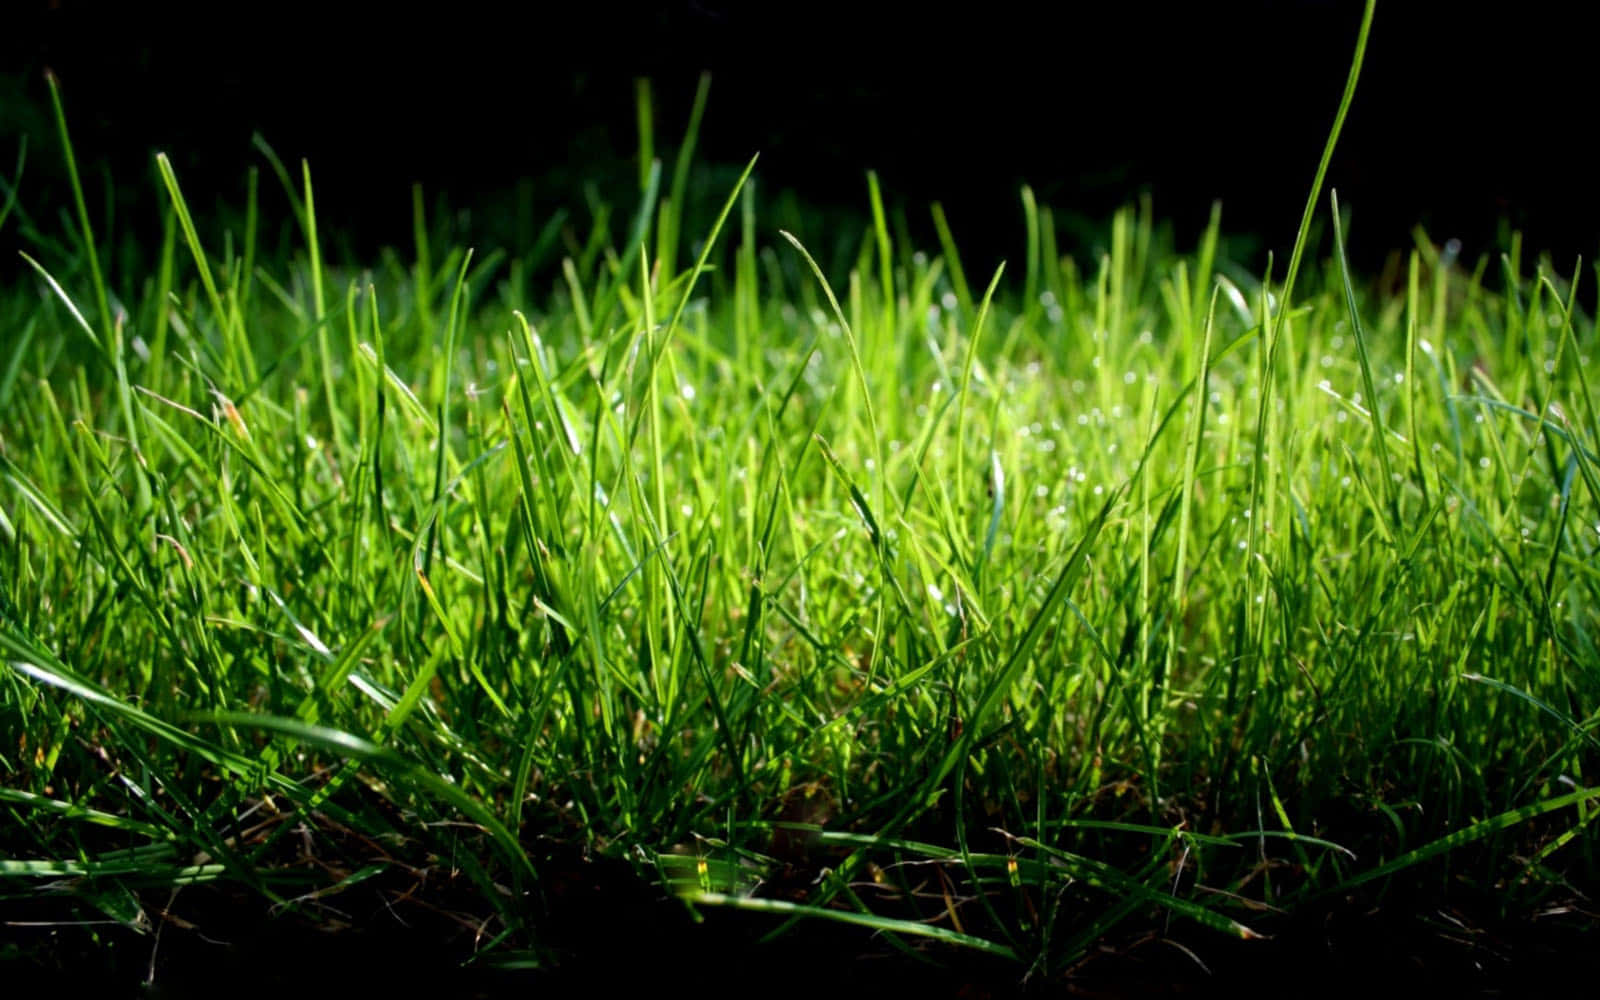 A Green Sea of Grass